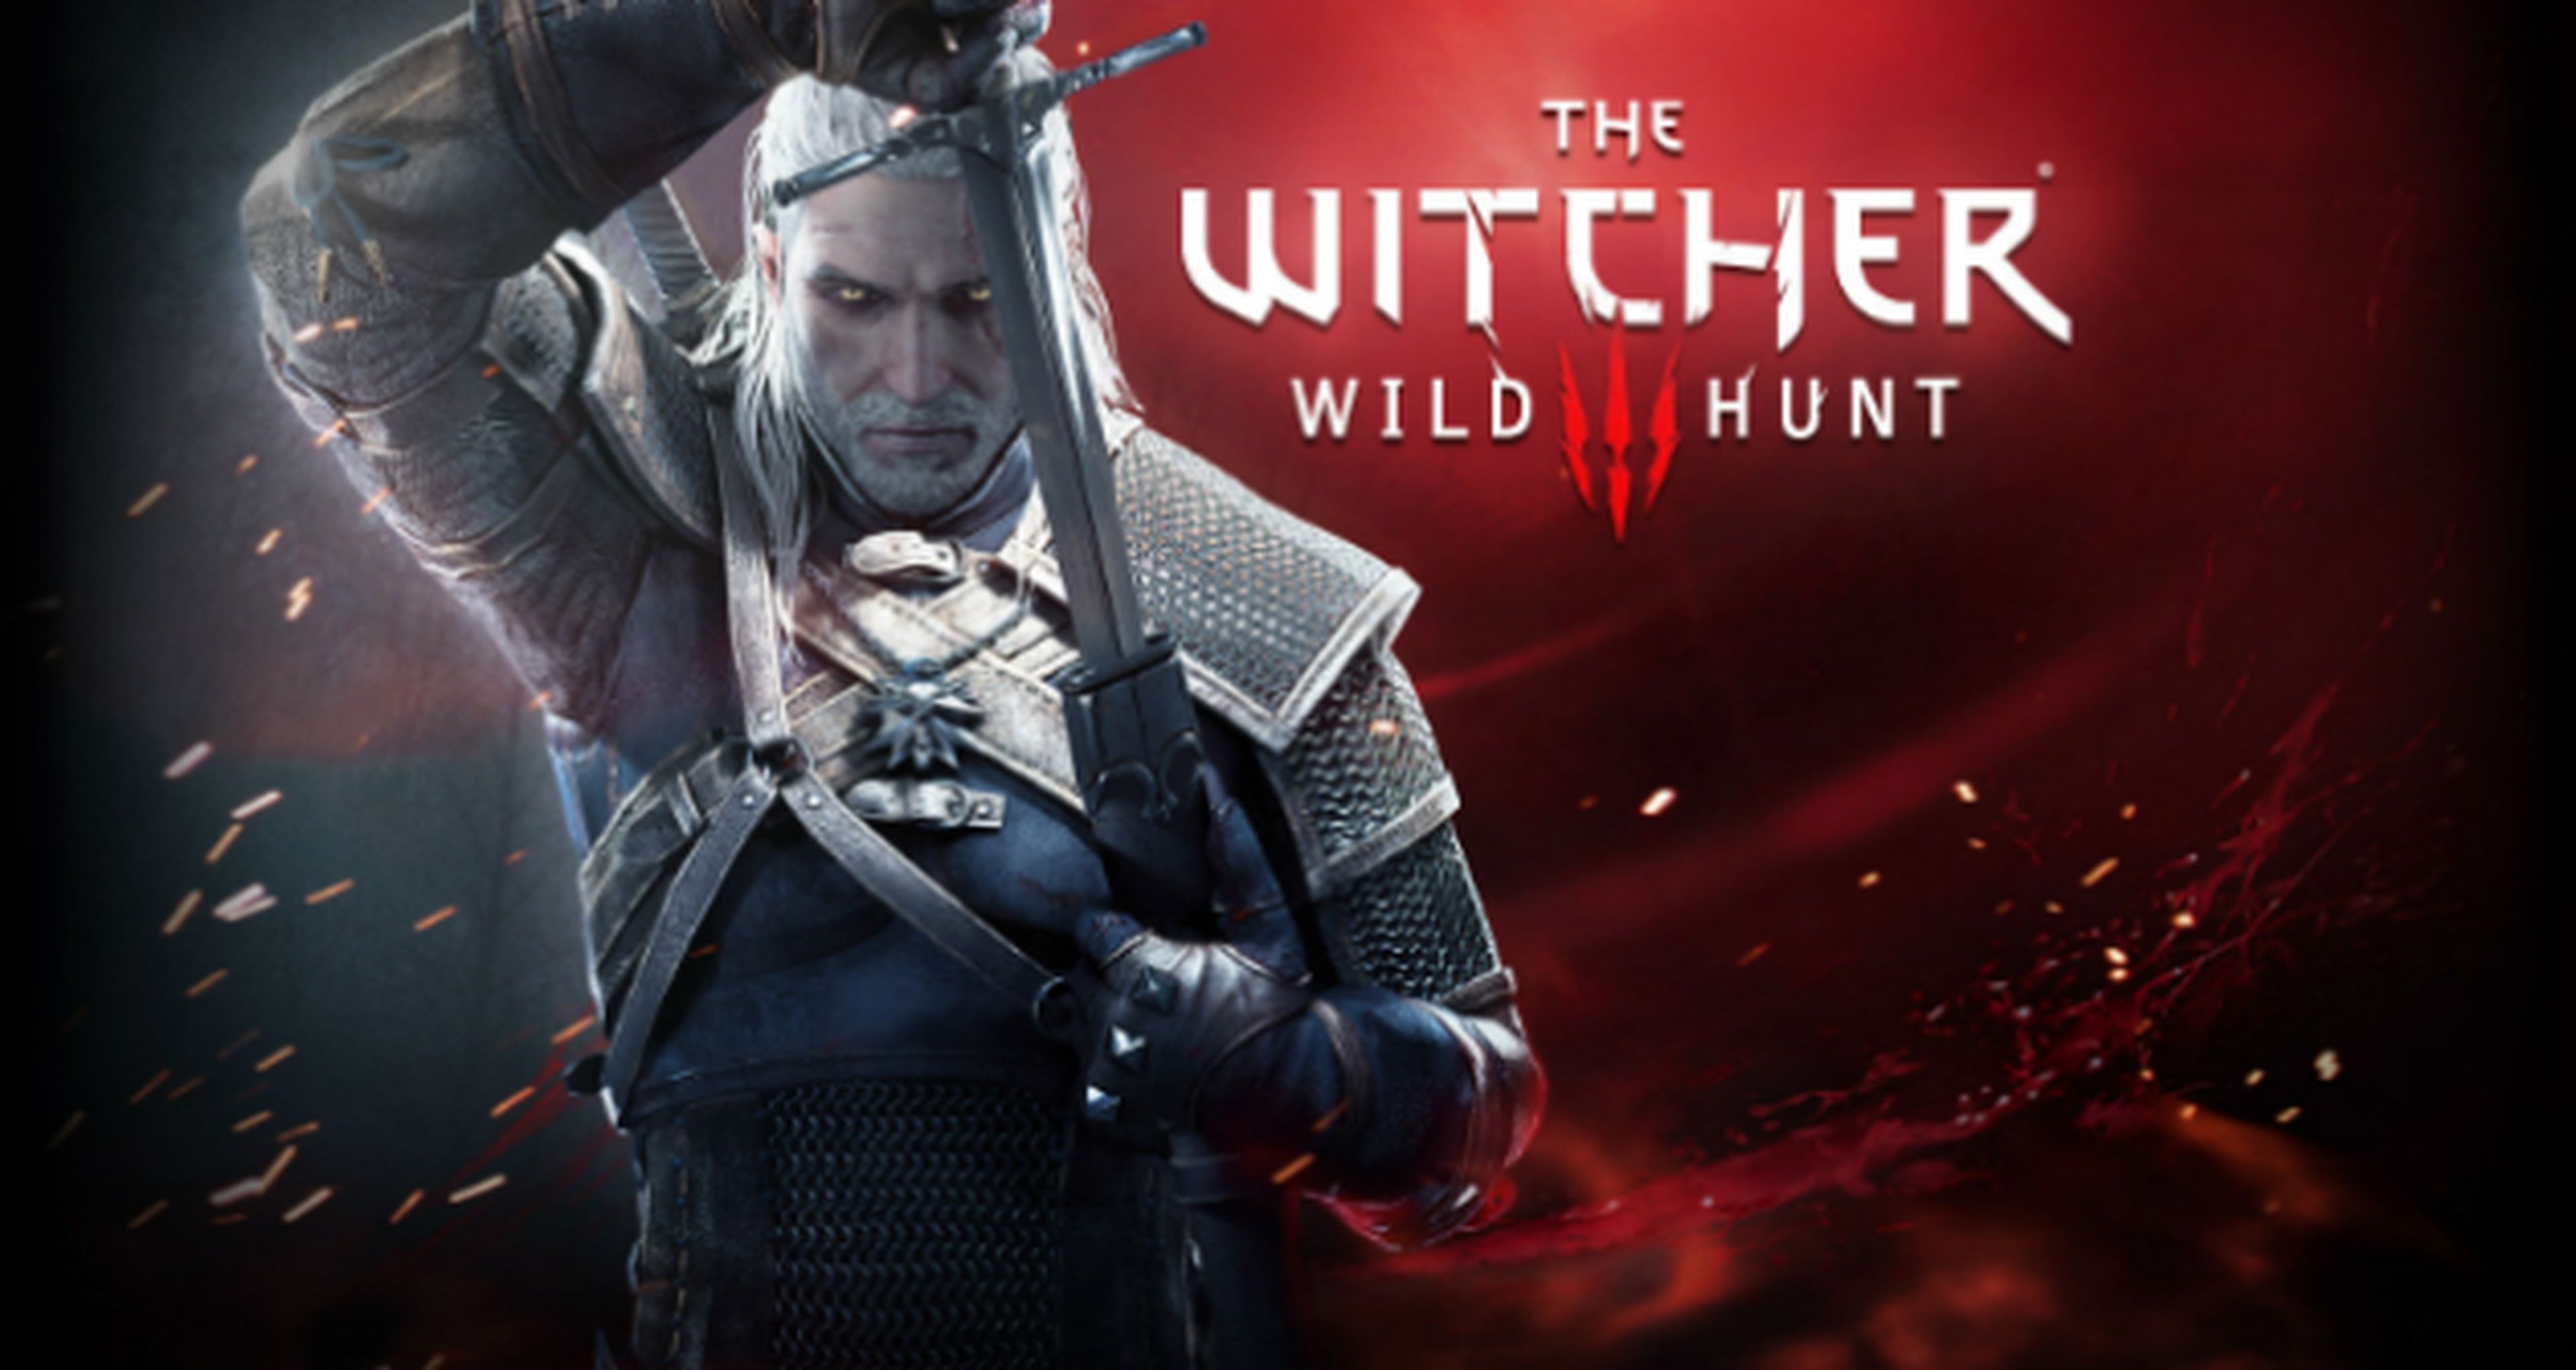 The Witcher 3 Wild Hunt y sus productos oficiales en GAME